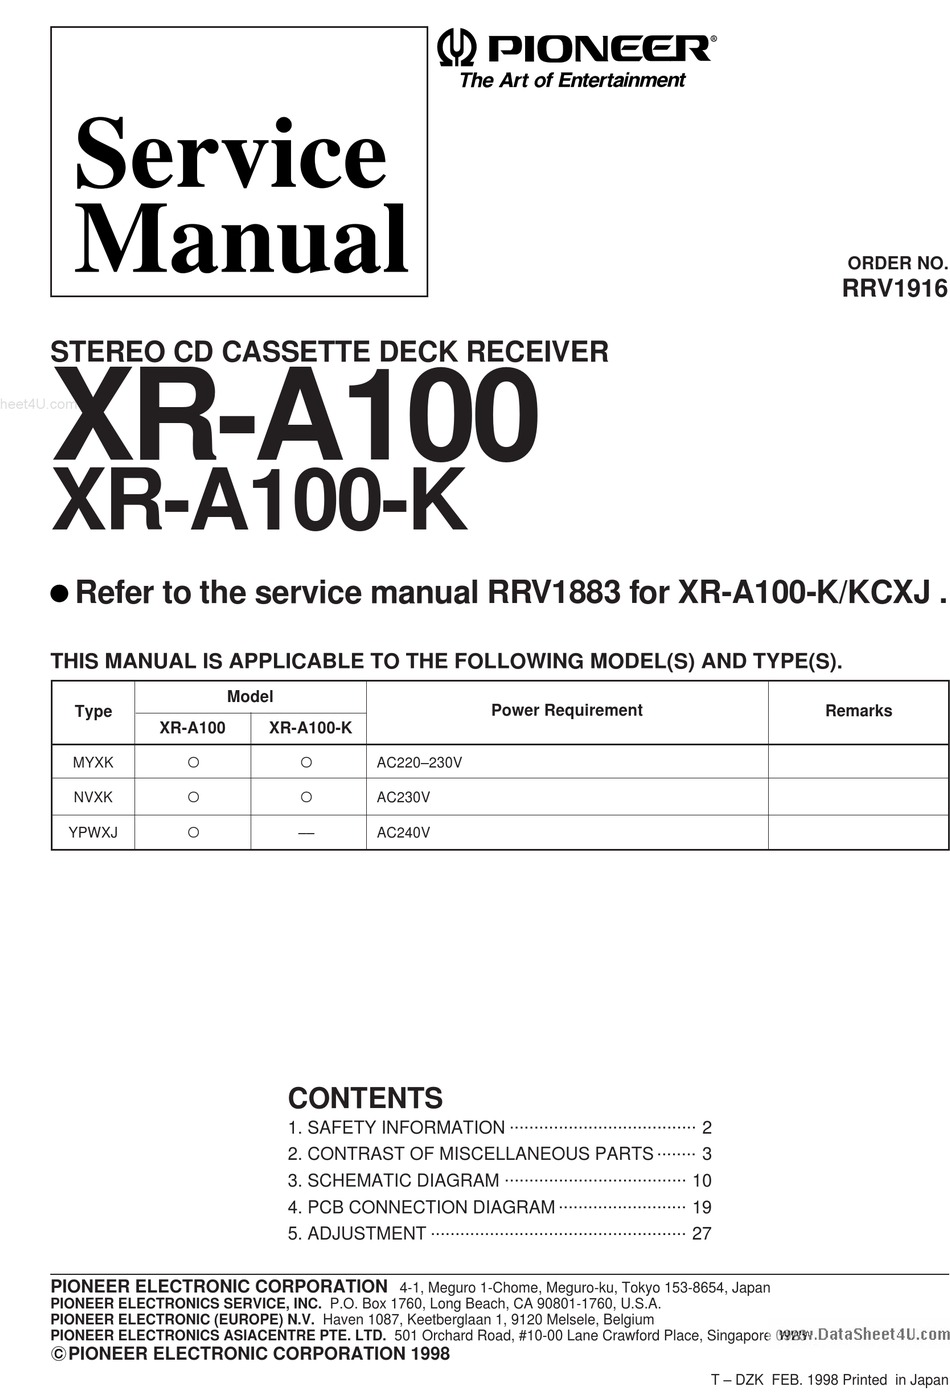 PIONEER XR-A100 SERVICE MANUAL Pdf Download | ManualsLib